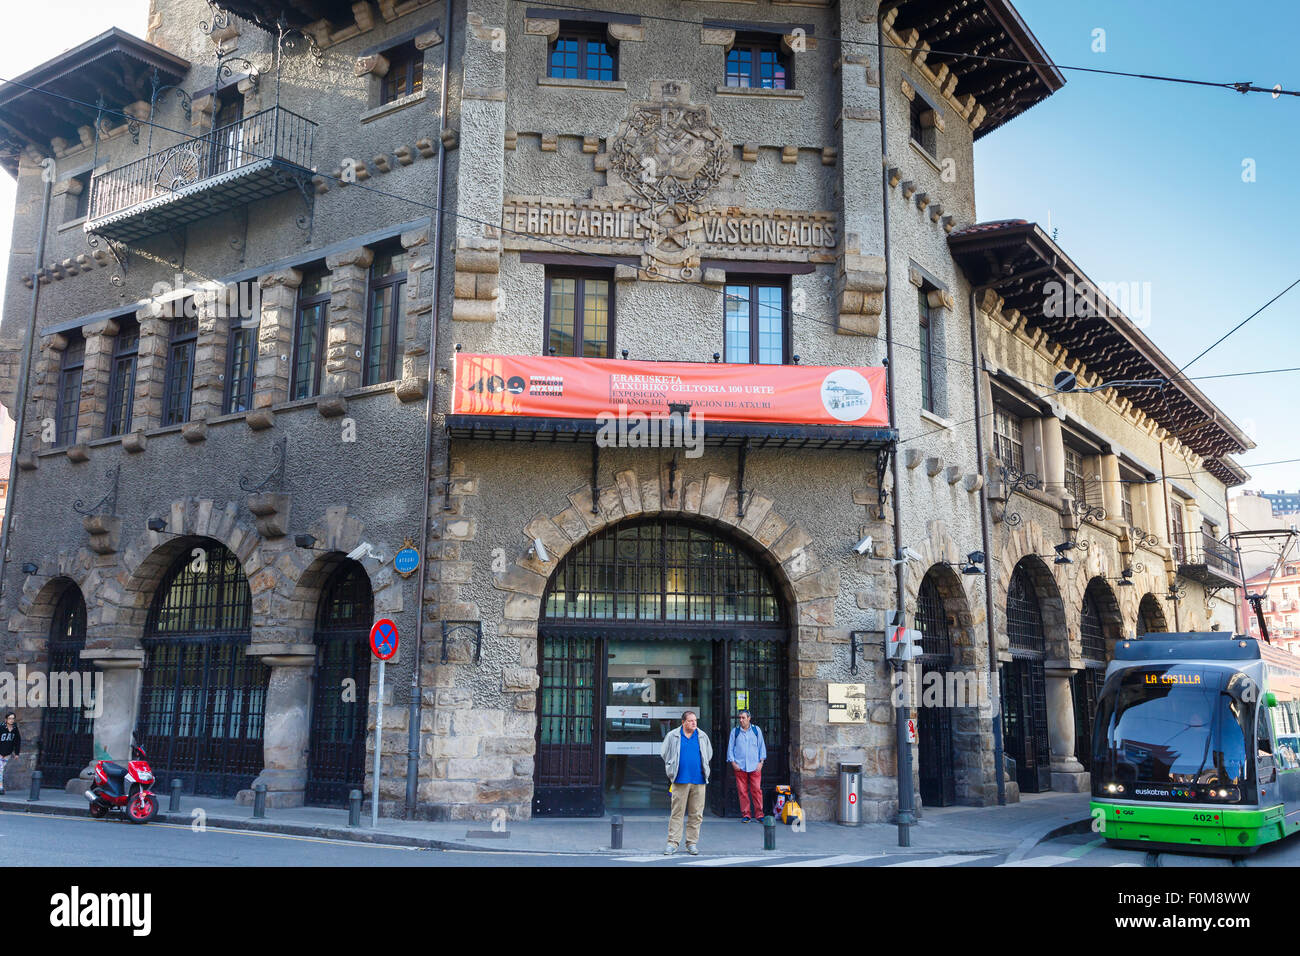 La gare de Atxuri. Bilbao, Biscaye, Espagne, Europe. Banque D'Images